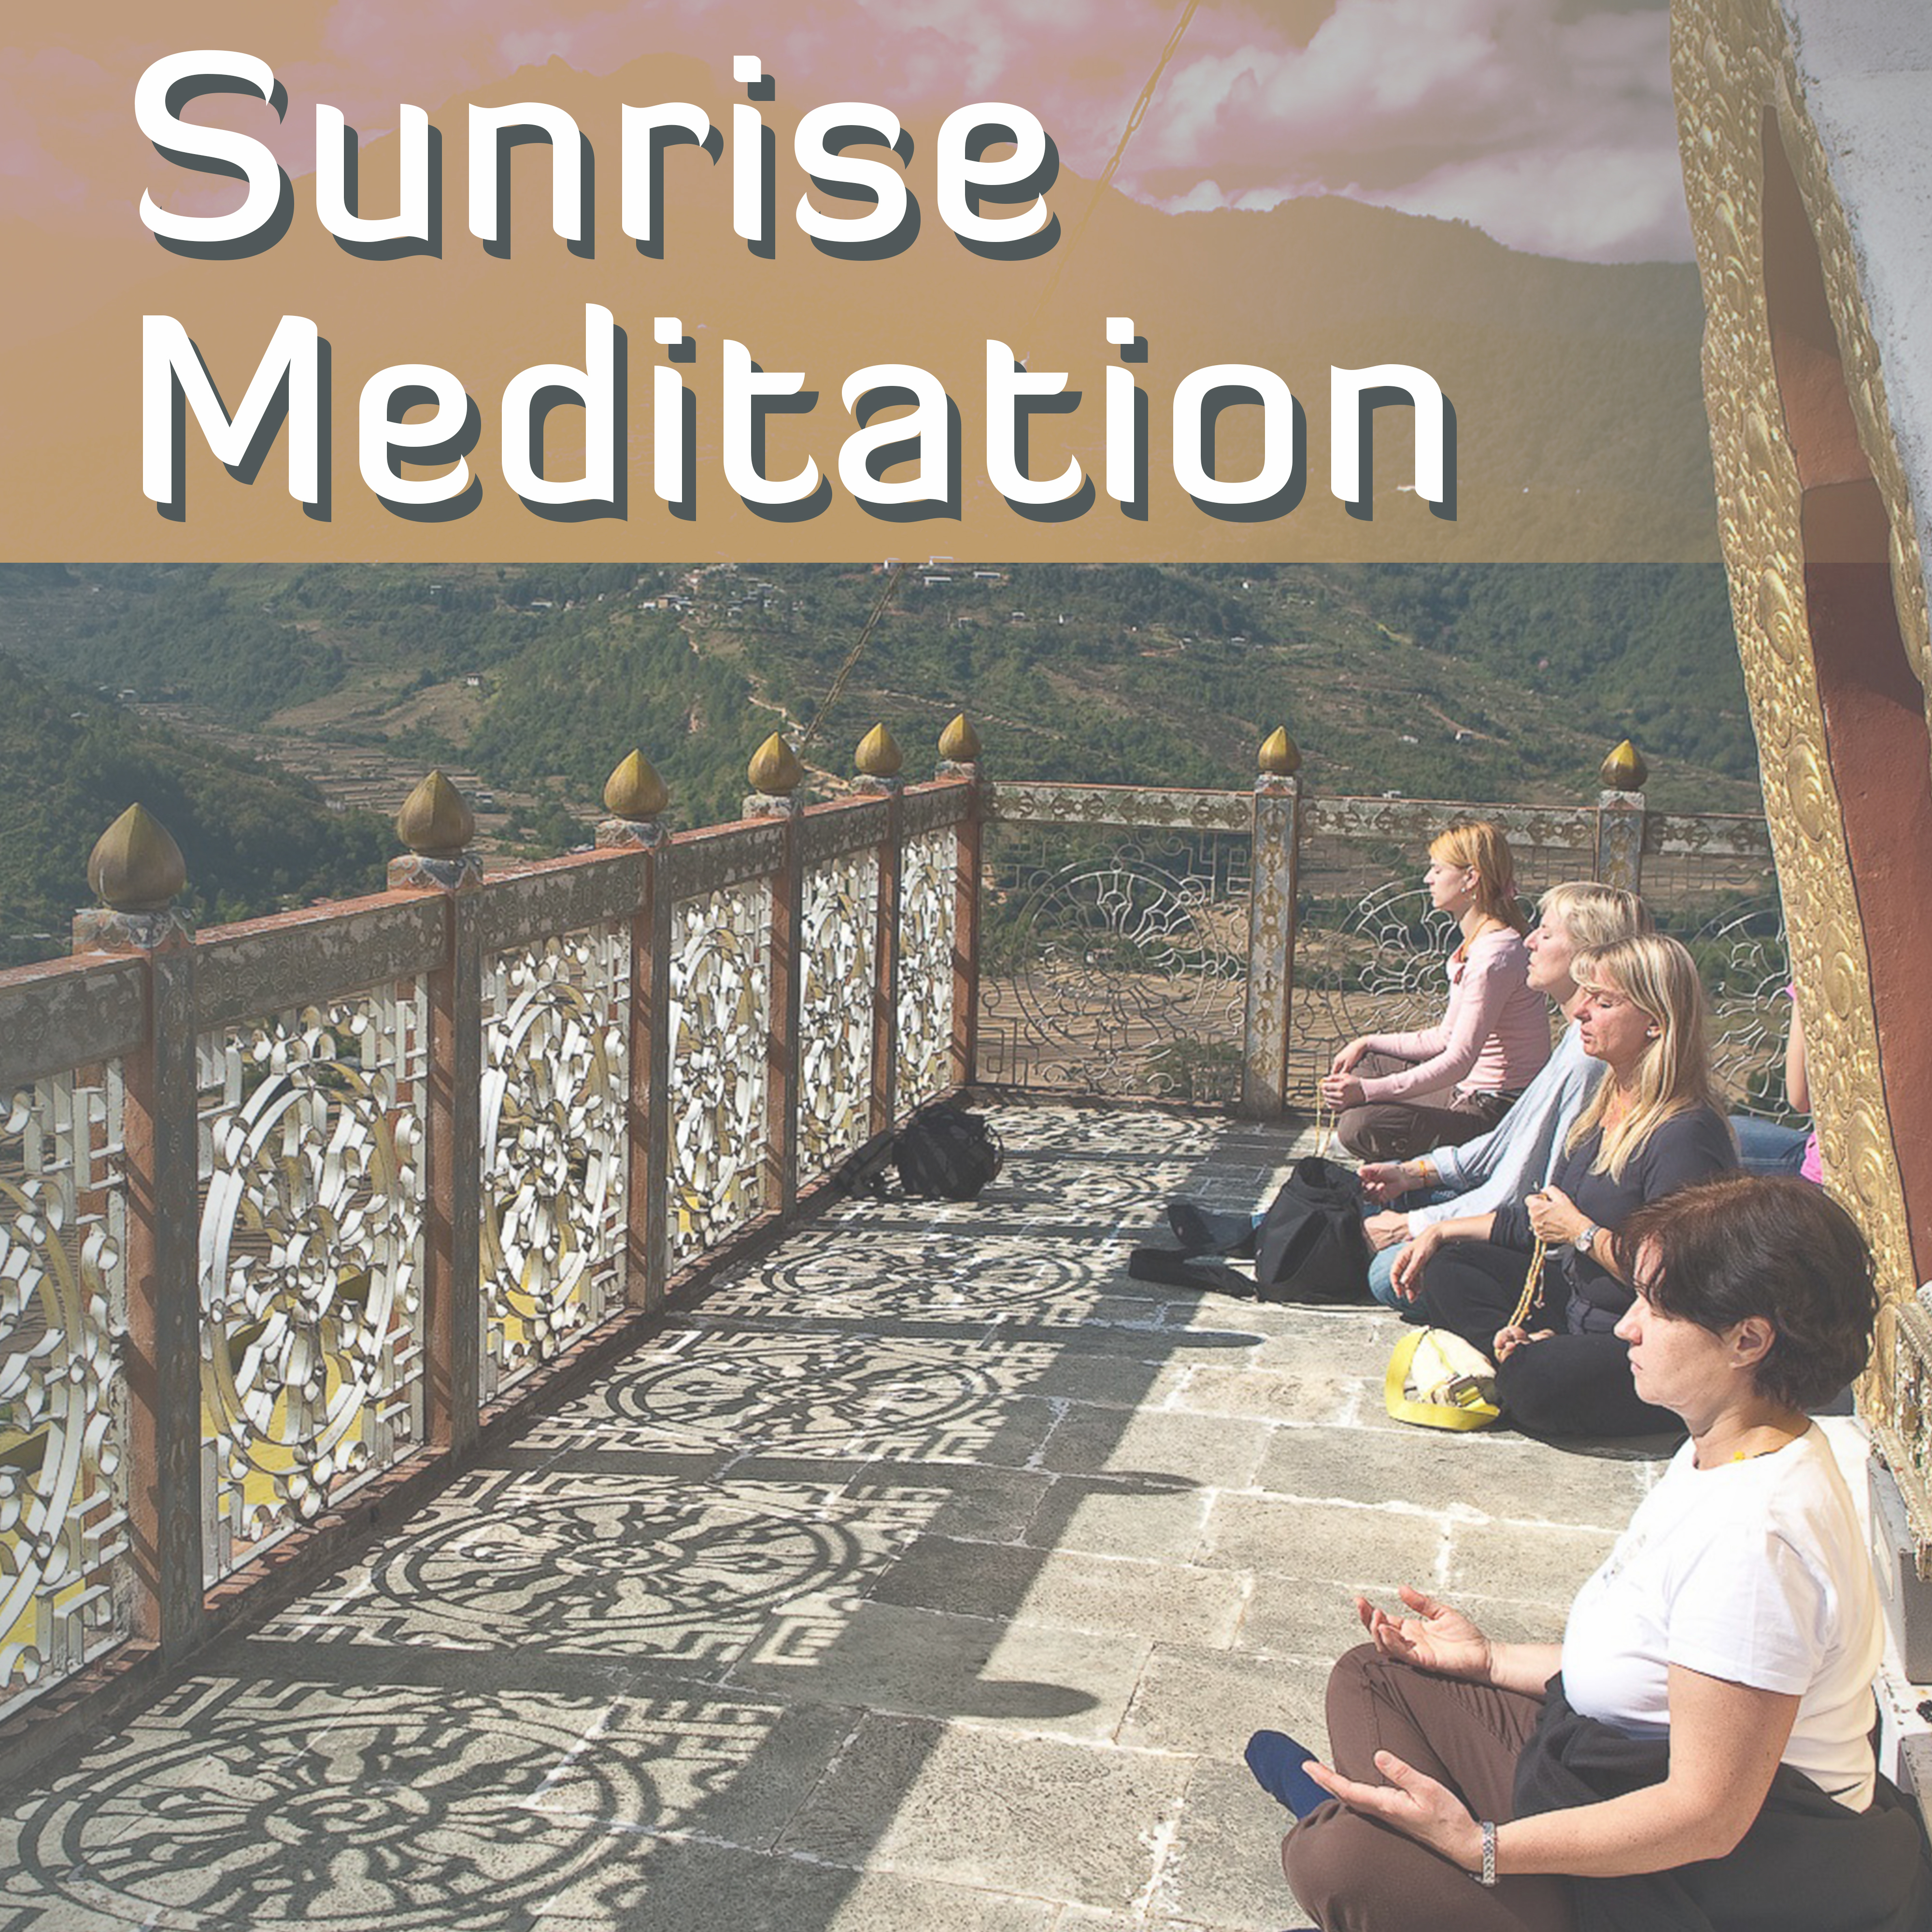 Sunrise Meditation – Spiritual Tibetan Music, Asian Zen, Relaxation, Yoga Music, New Age 2017